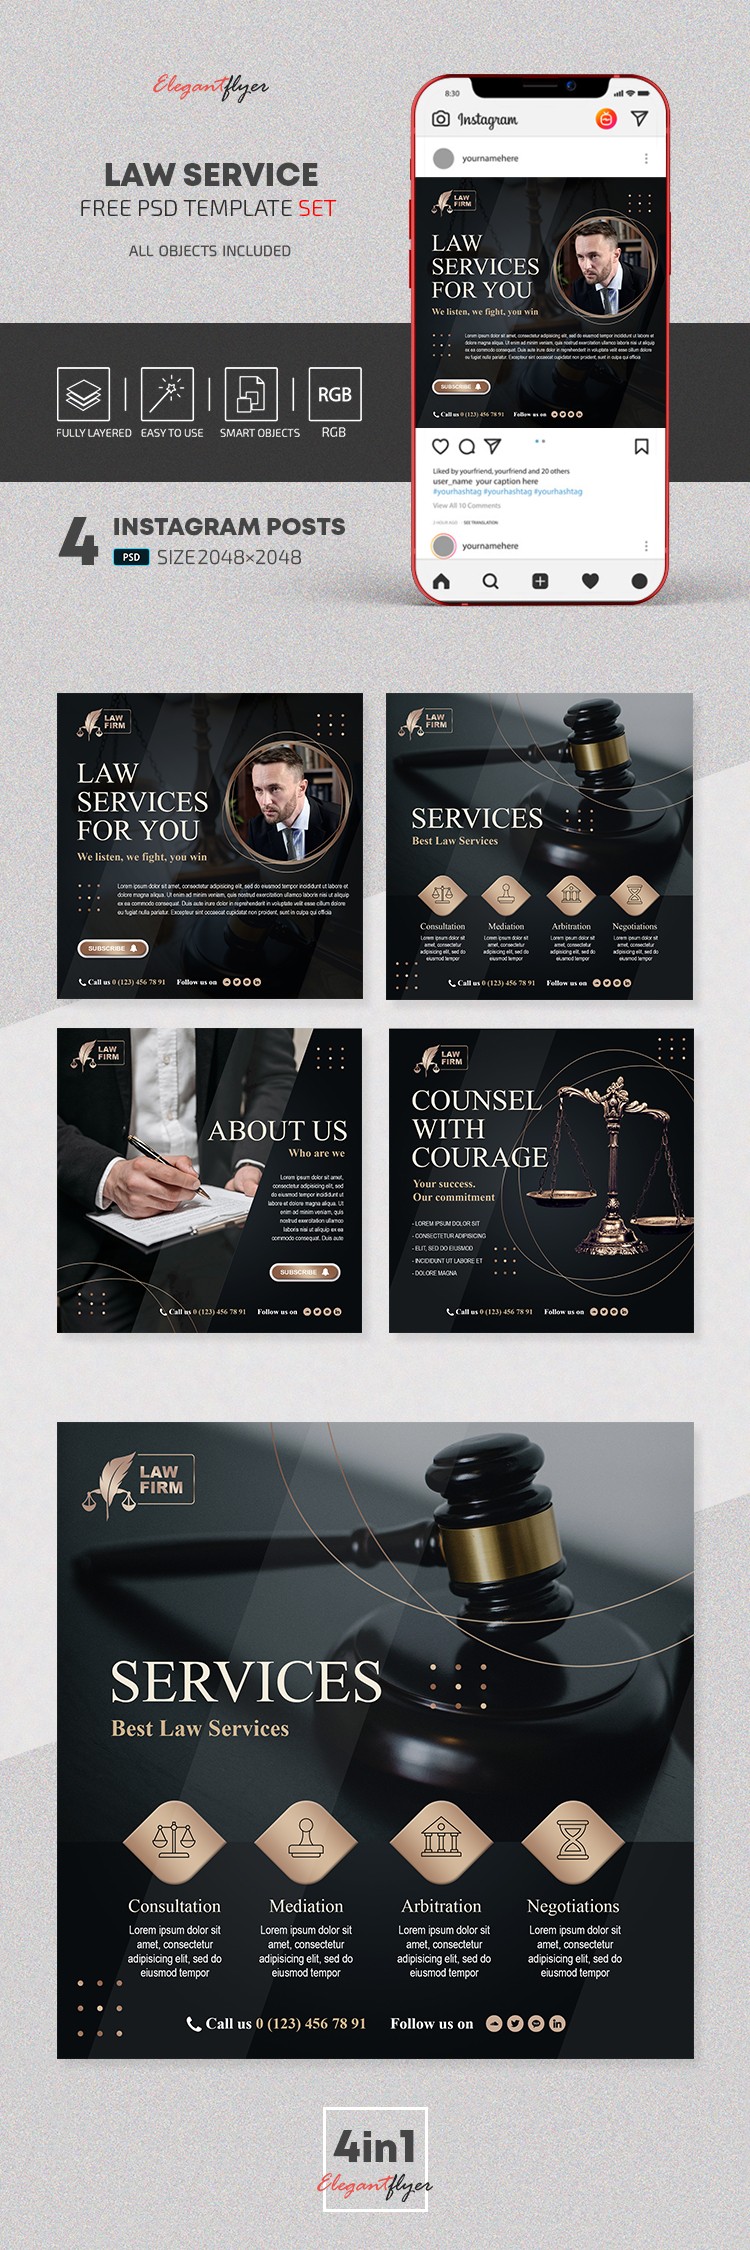 Law Service Instagram by ElegantFlyer